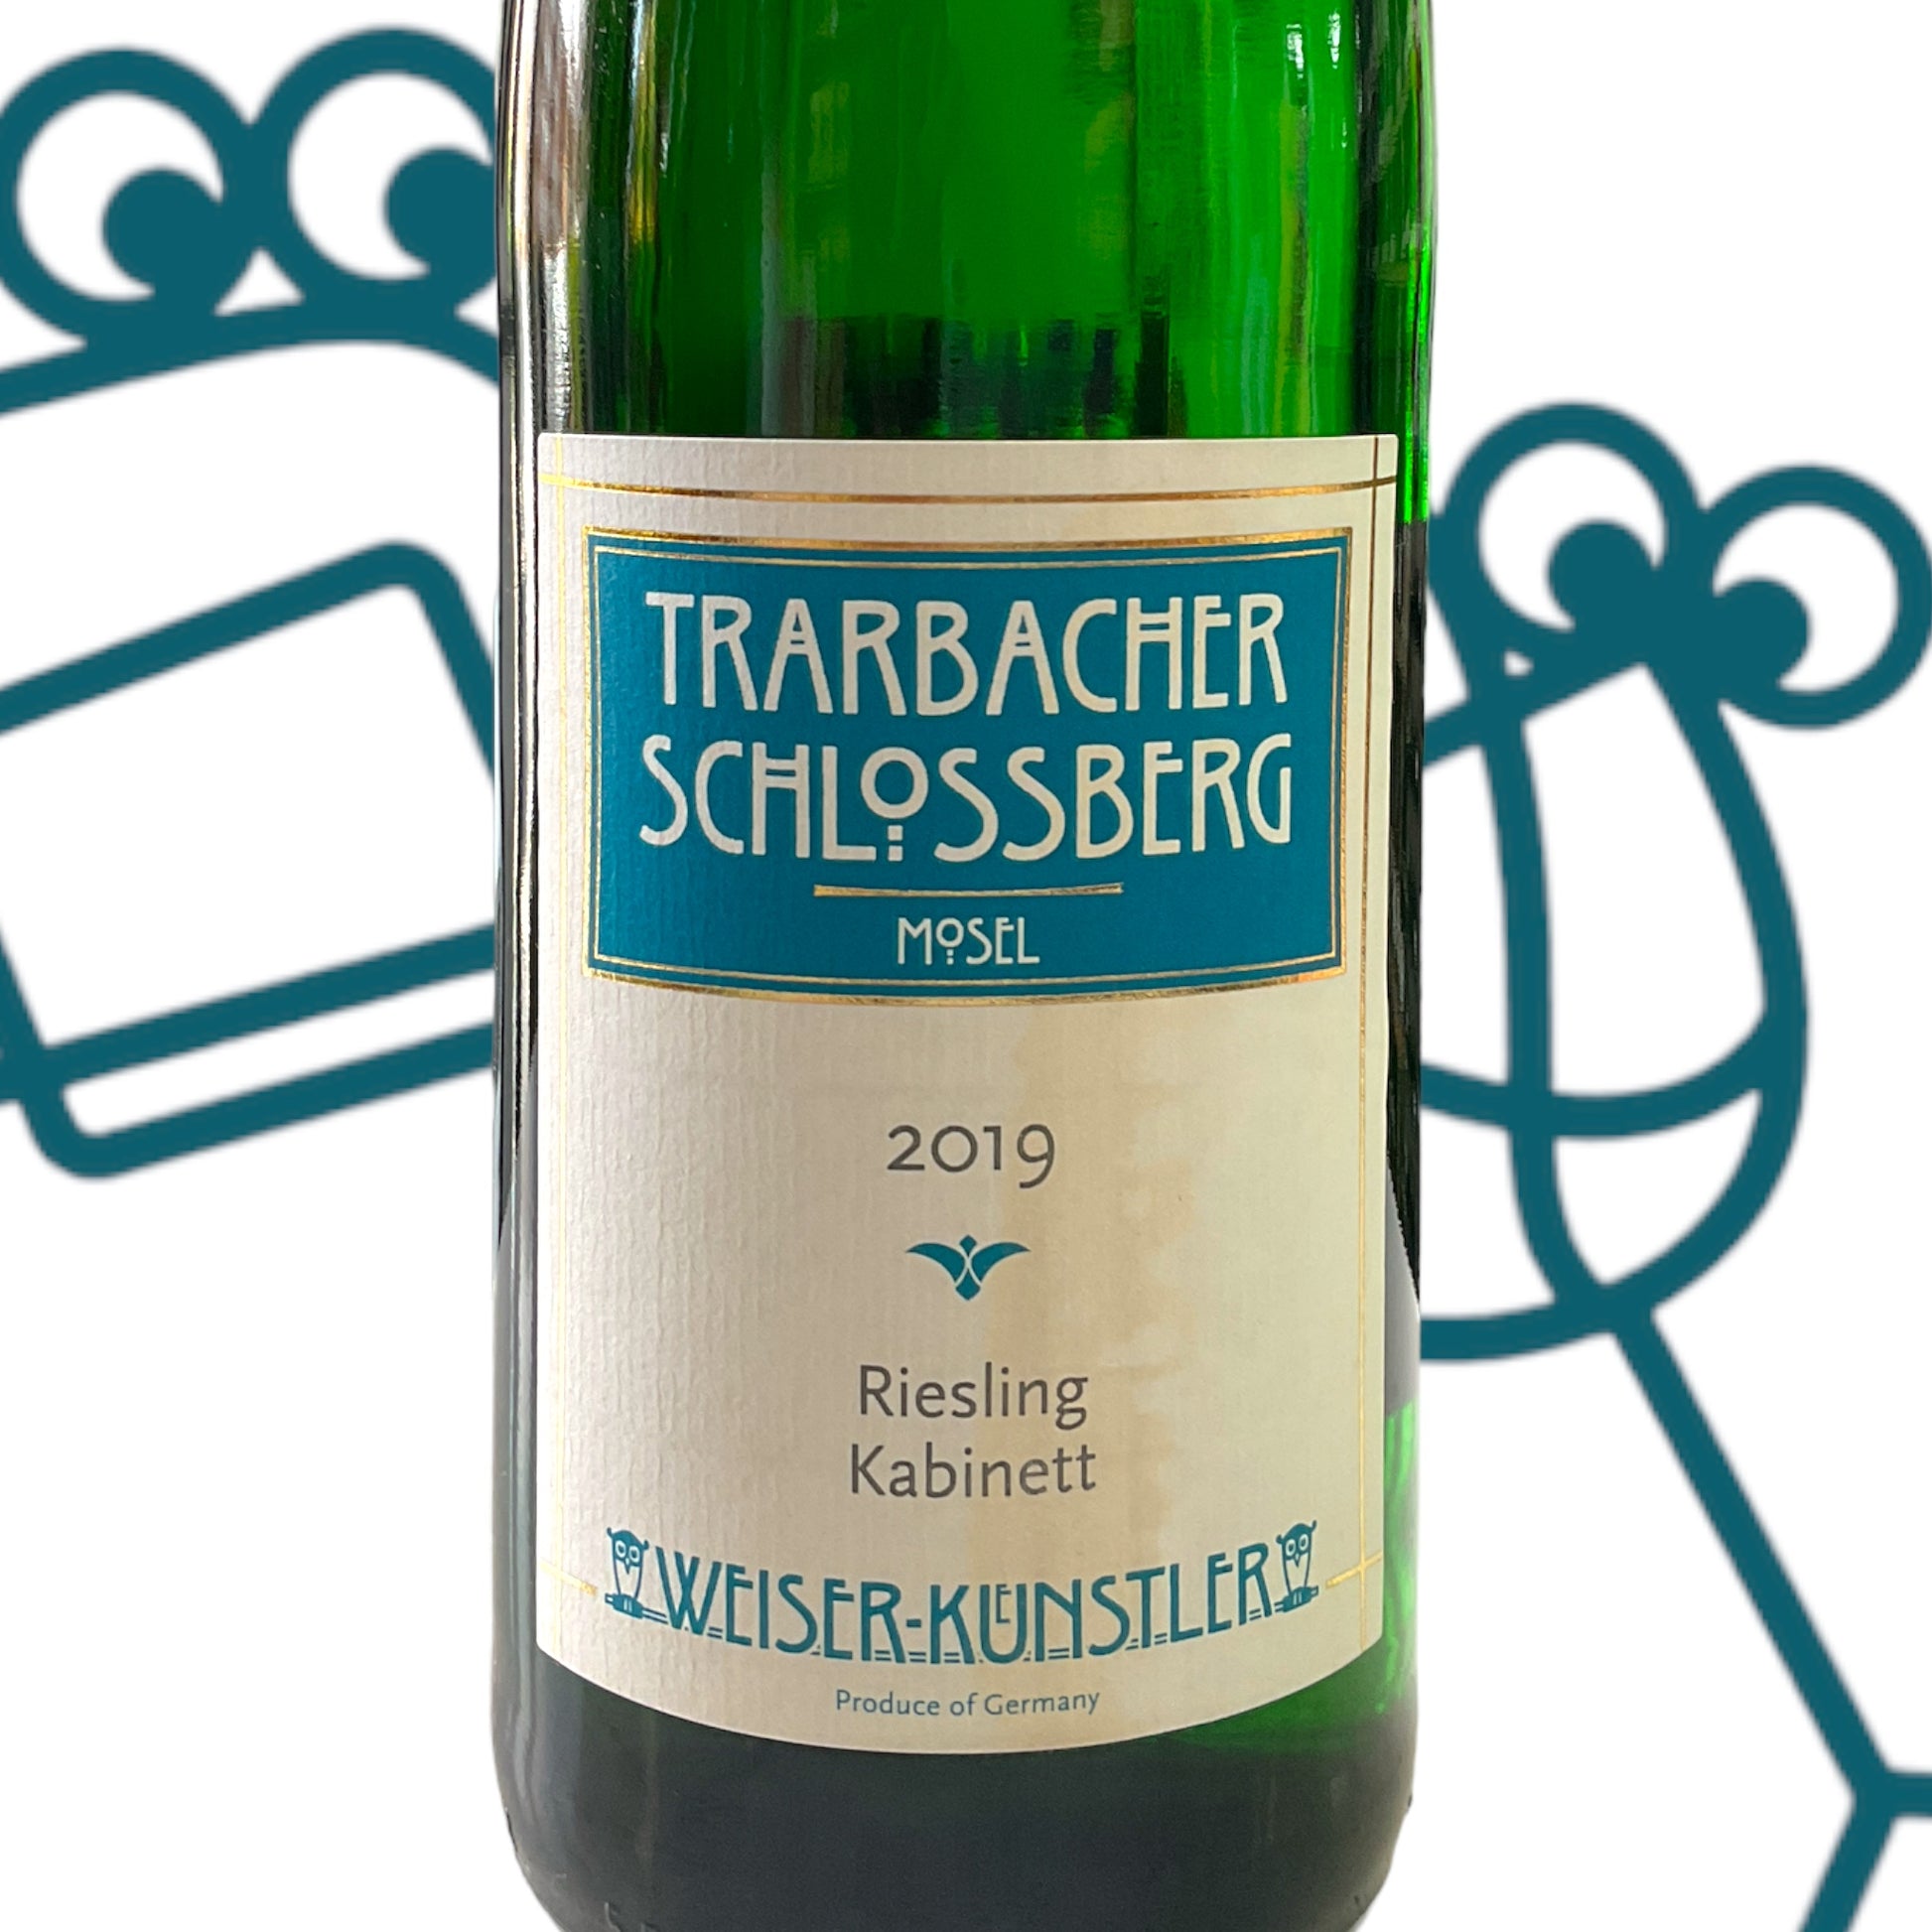 Weiser-Künstler 'Trarbacher Schlossberg Kabinett' 2019 Mosel, Germany - Williston Park Wines & Spirits